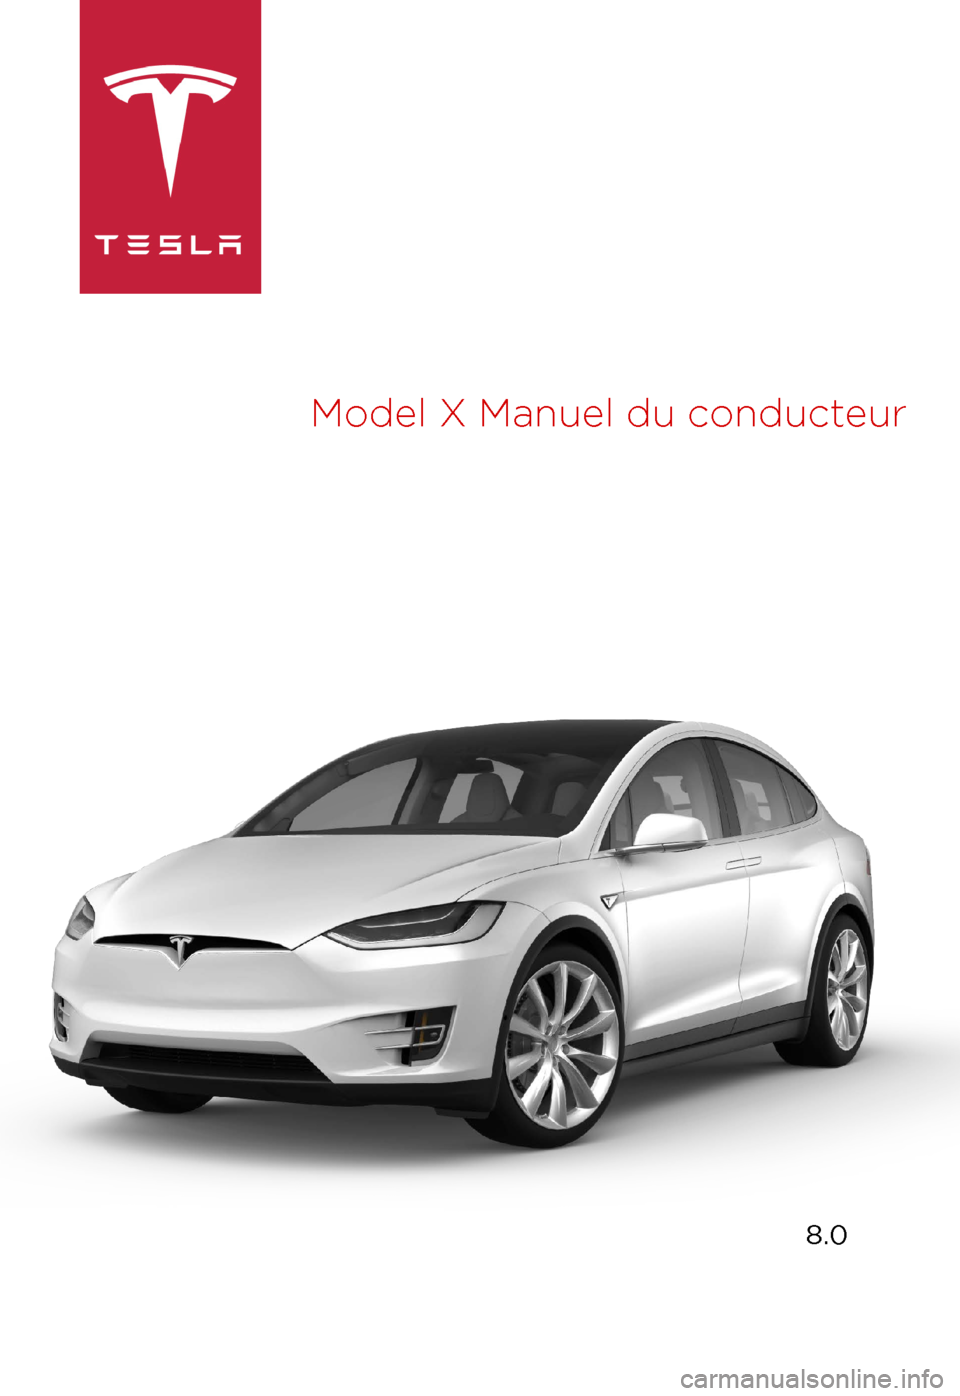 TESLA MODEL X 2017  Manuel du propriétaire (in F Model 
X Manuel du conducteur 8.0 